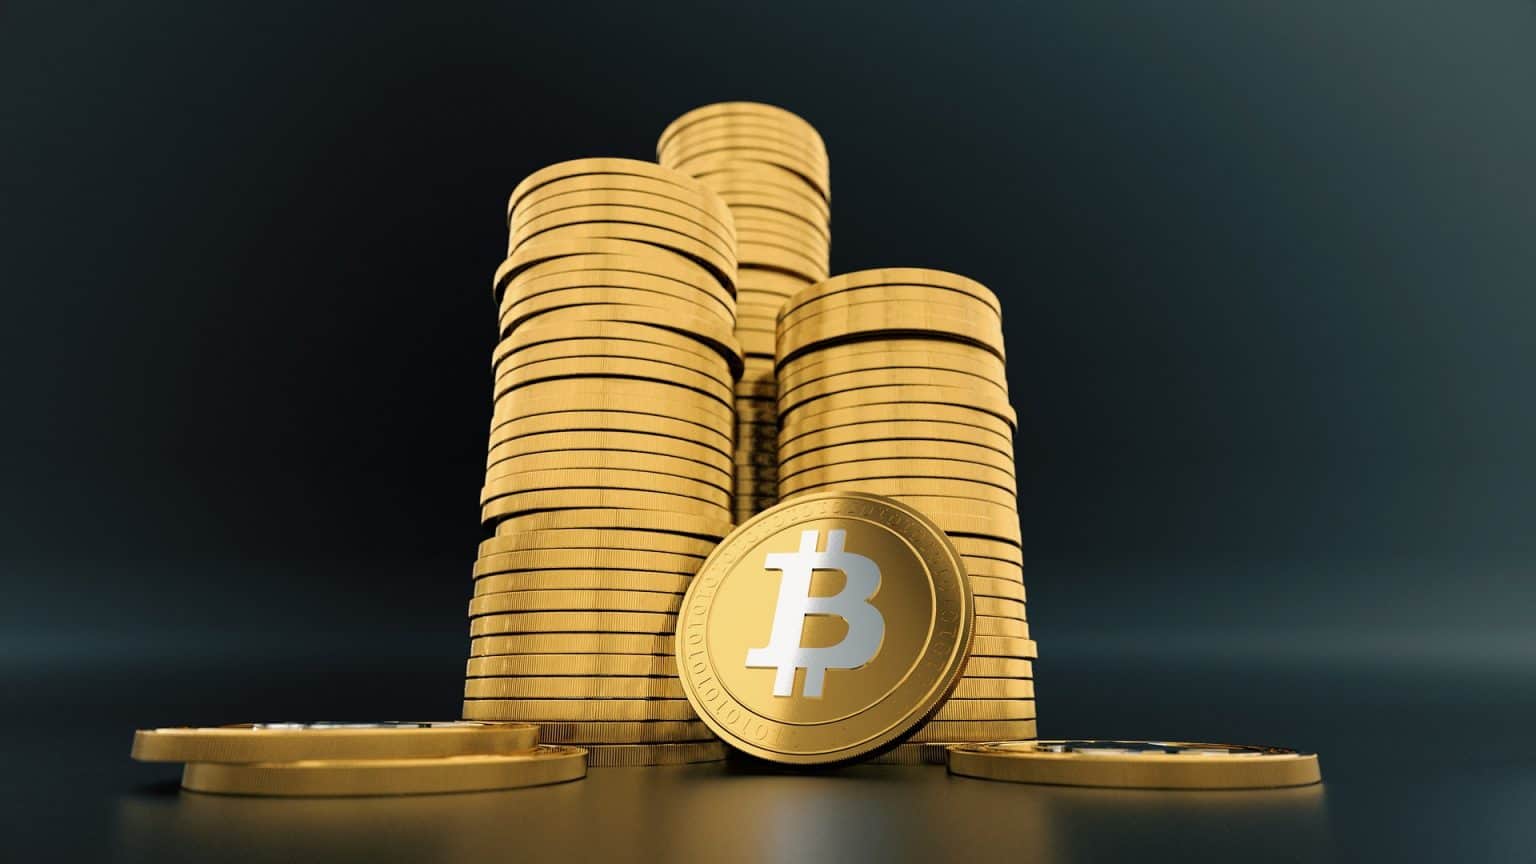 how much is $1 billion bitcoin worth